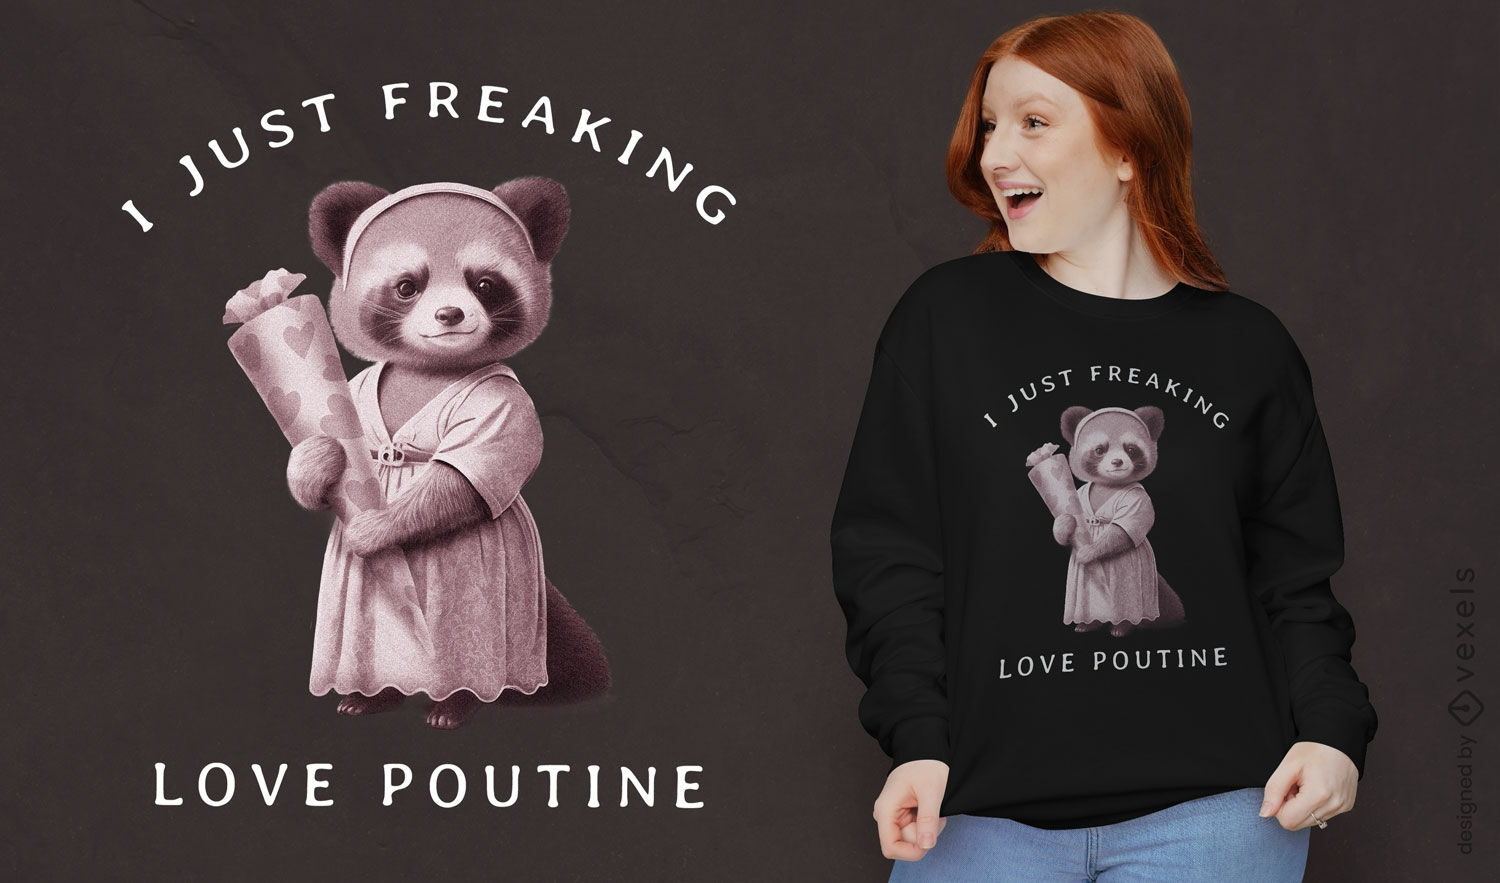 Red panda love poutine t-shirt design